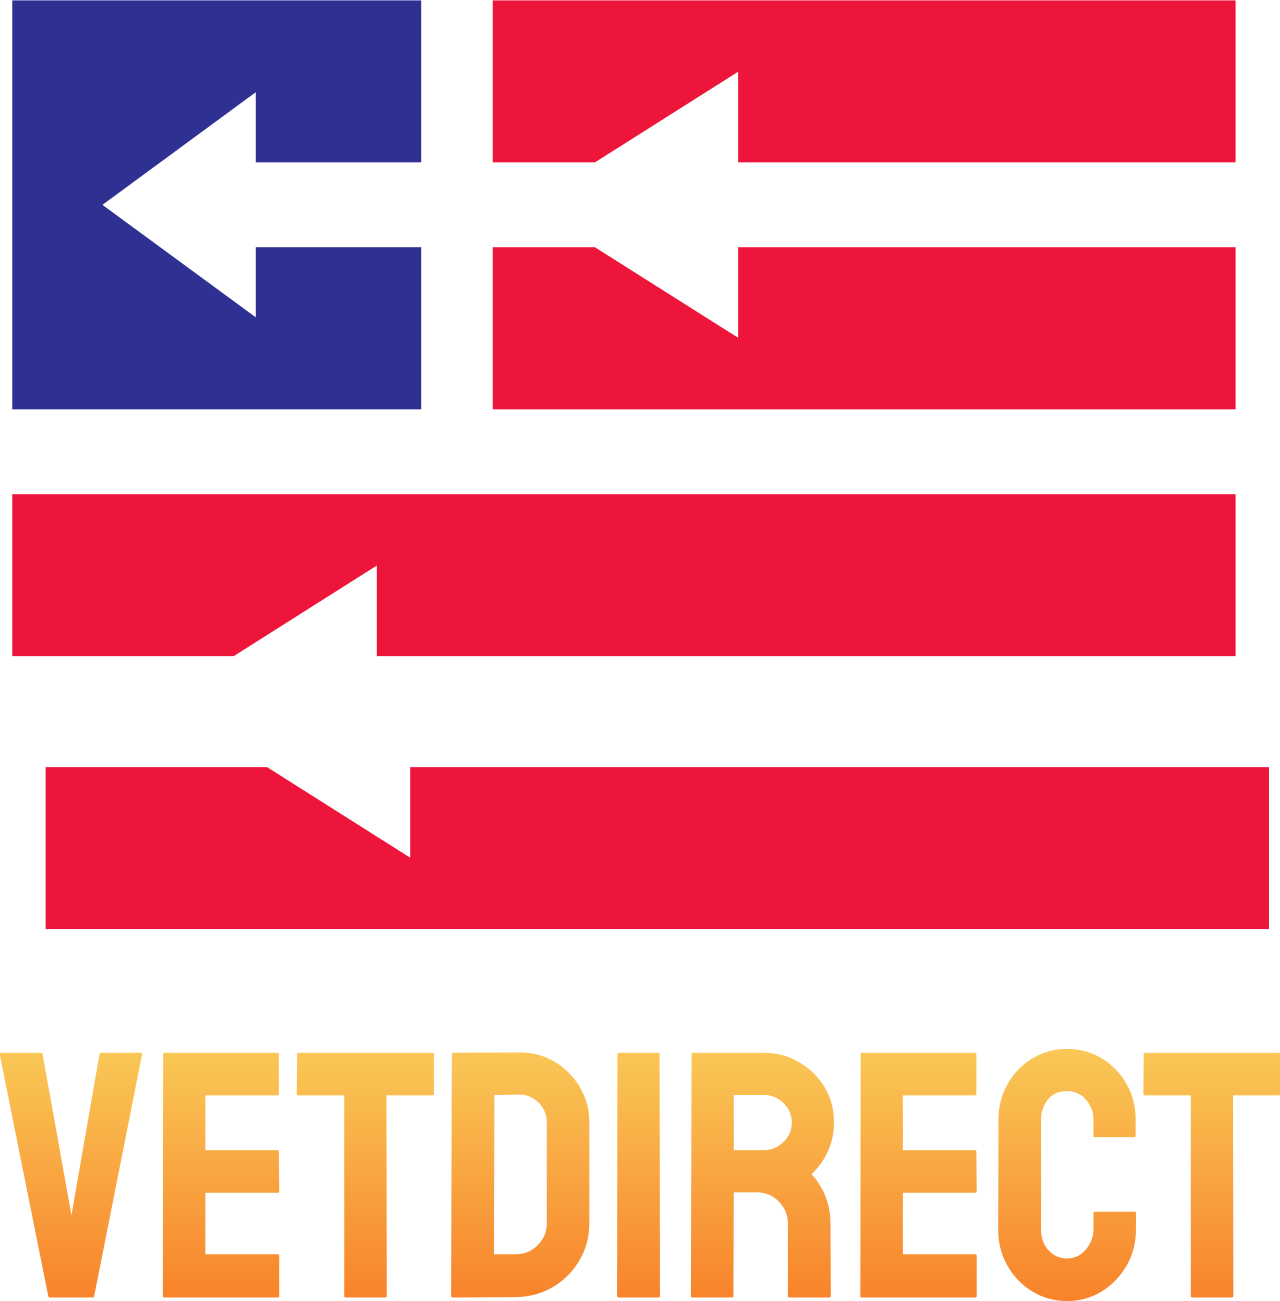 Vetdirect's logo